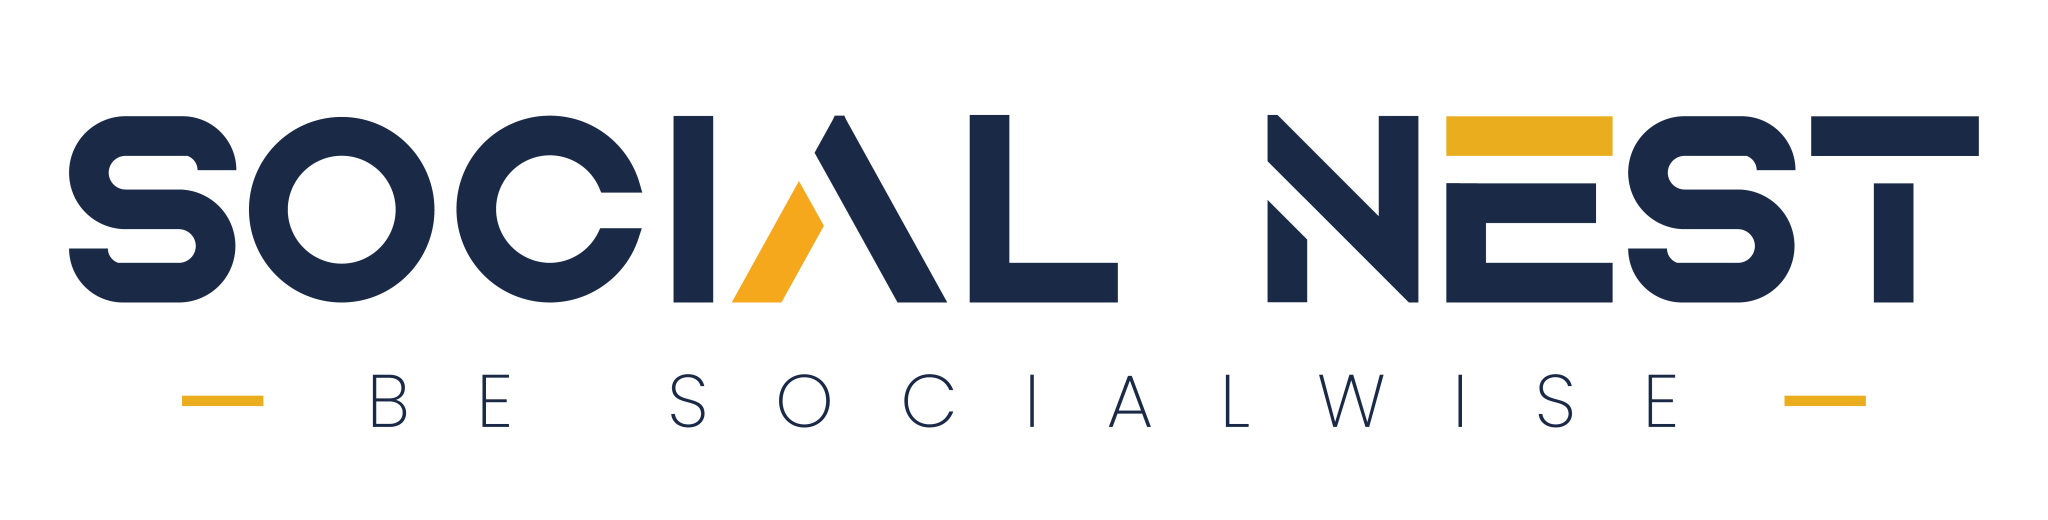 socialnest-logo